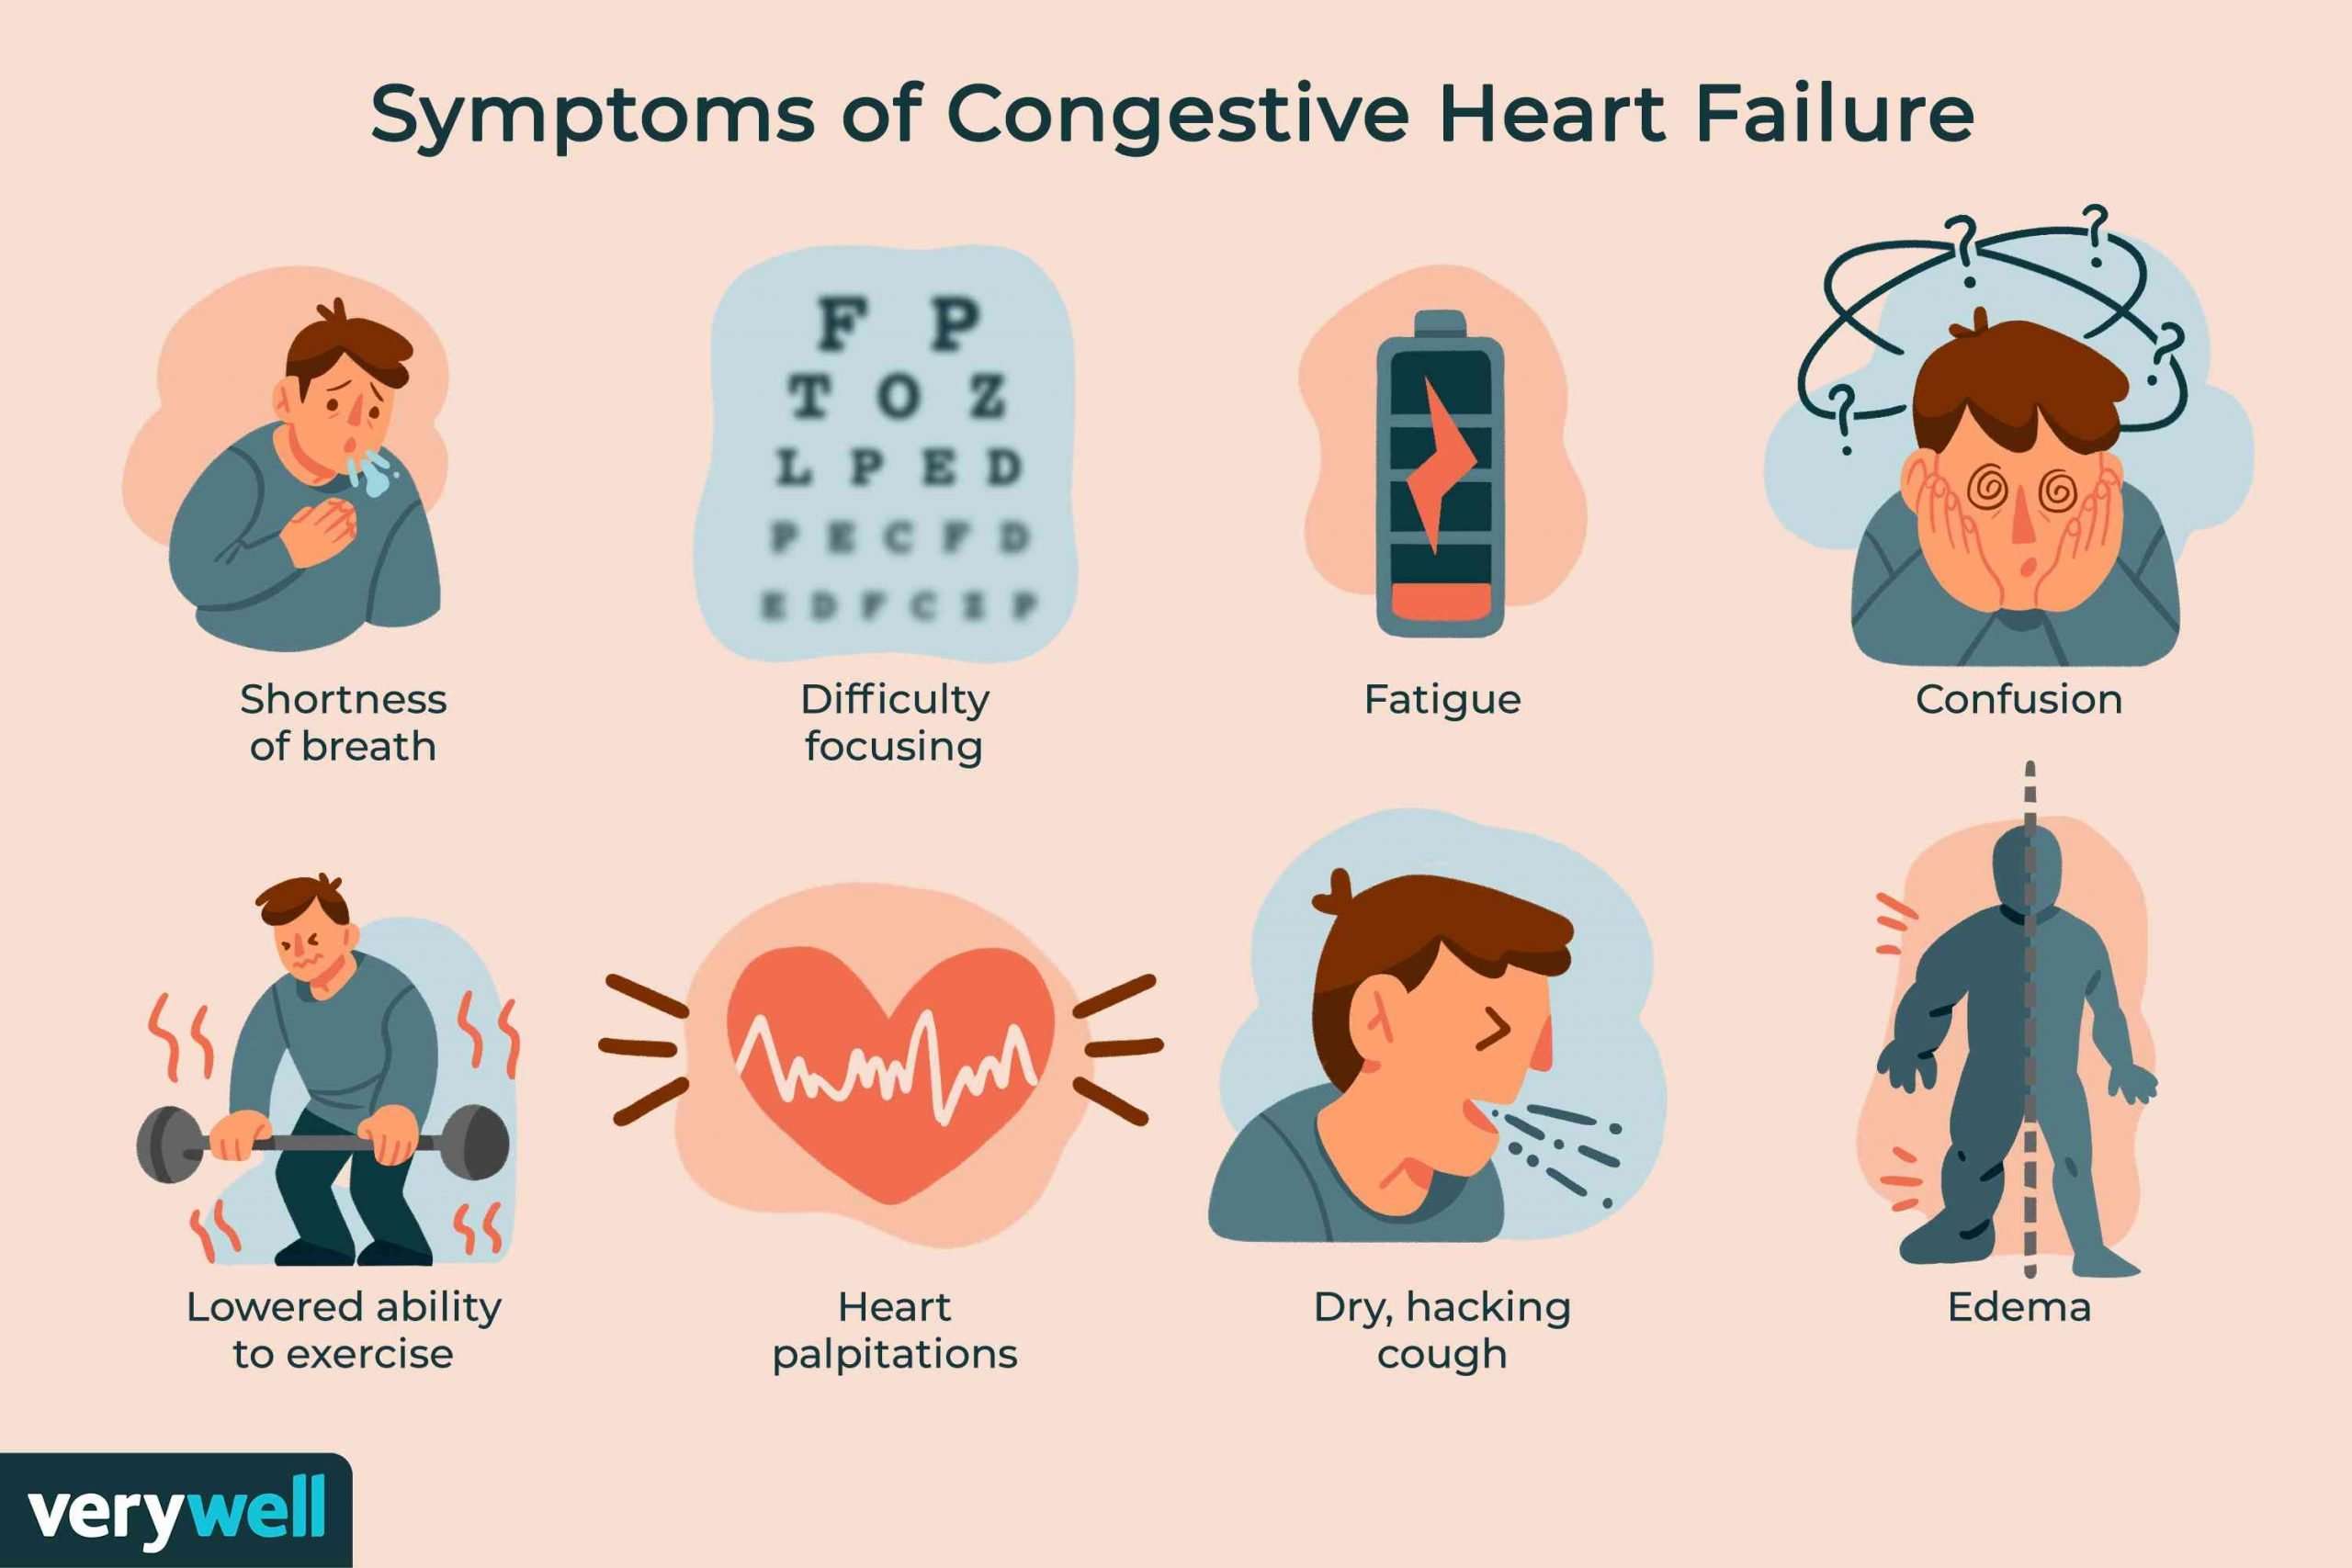 Congestive Heart Failure: The Medical Definition